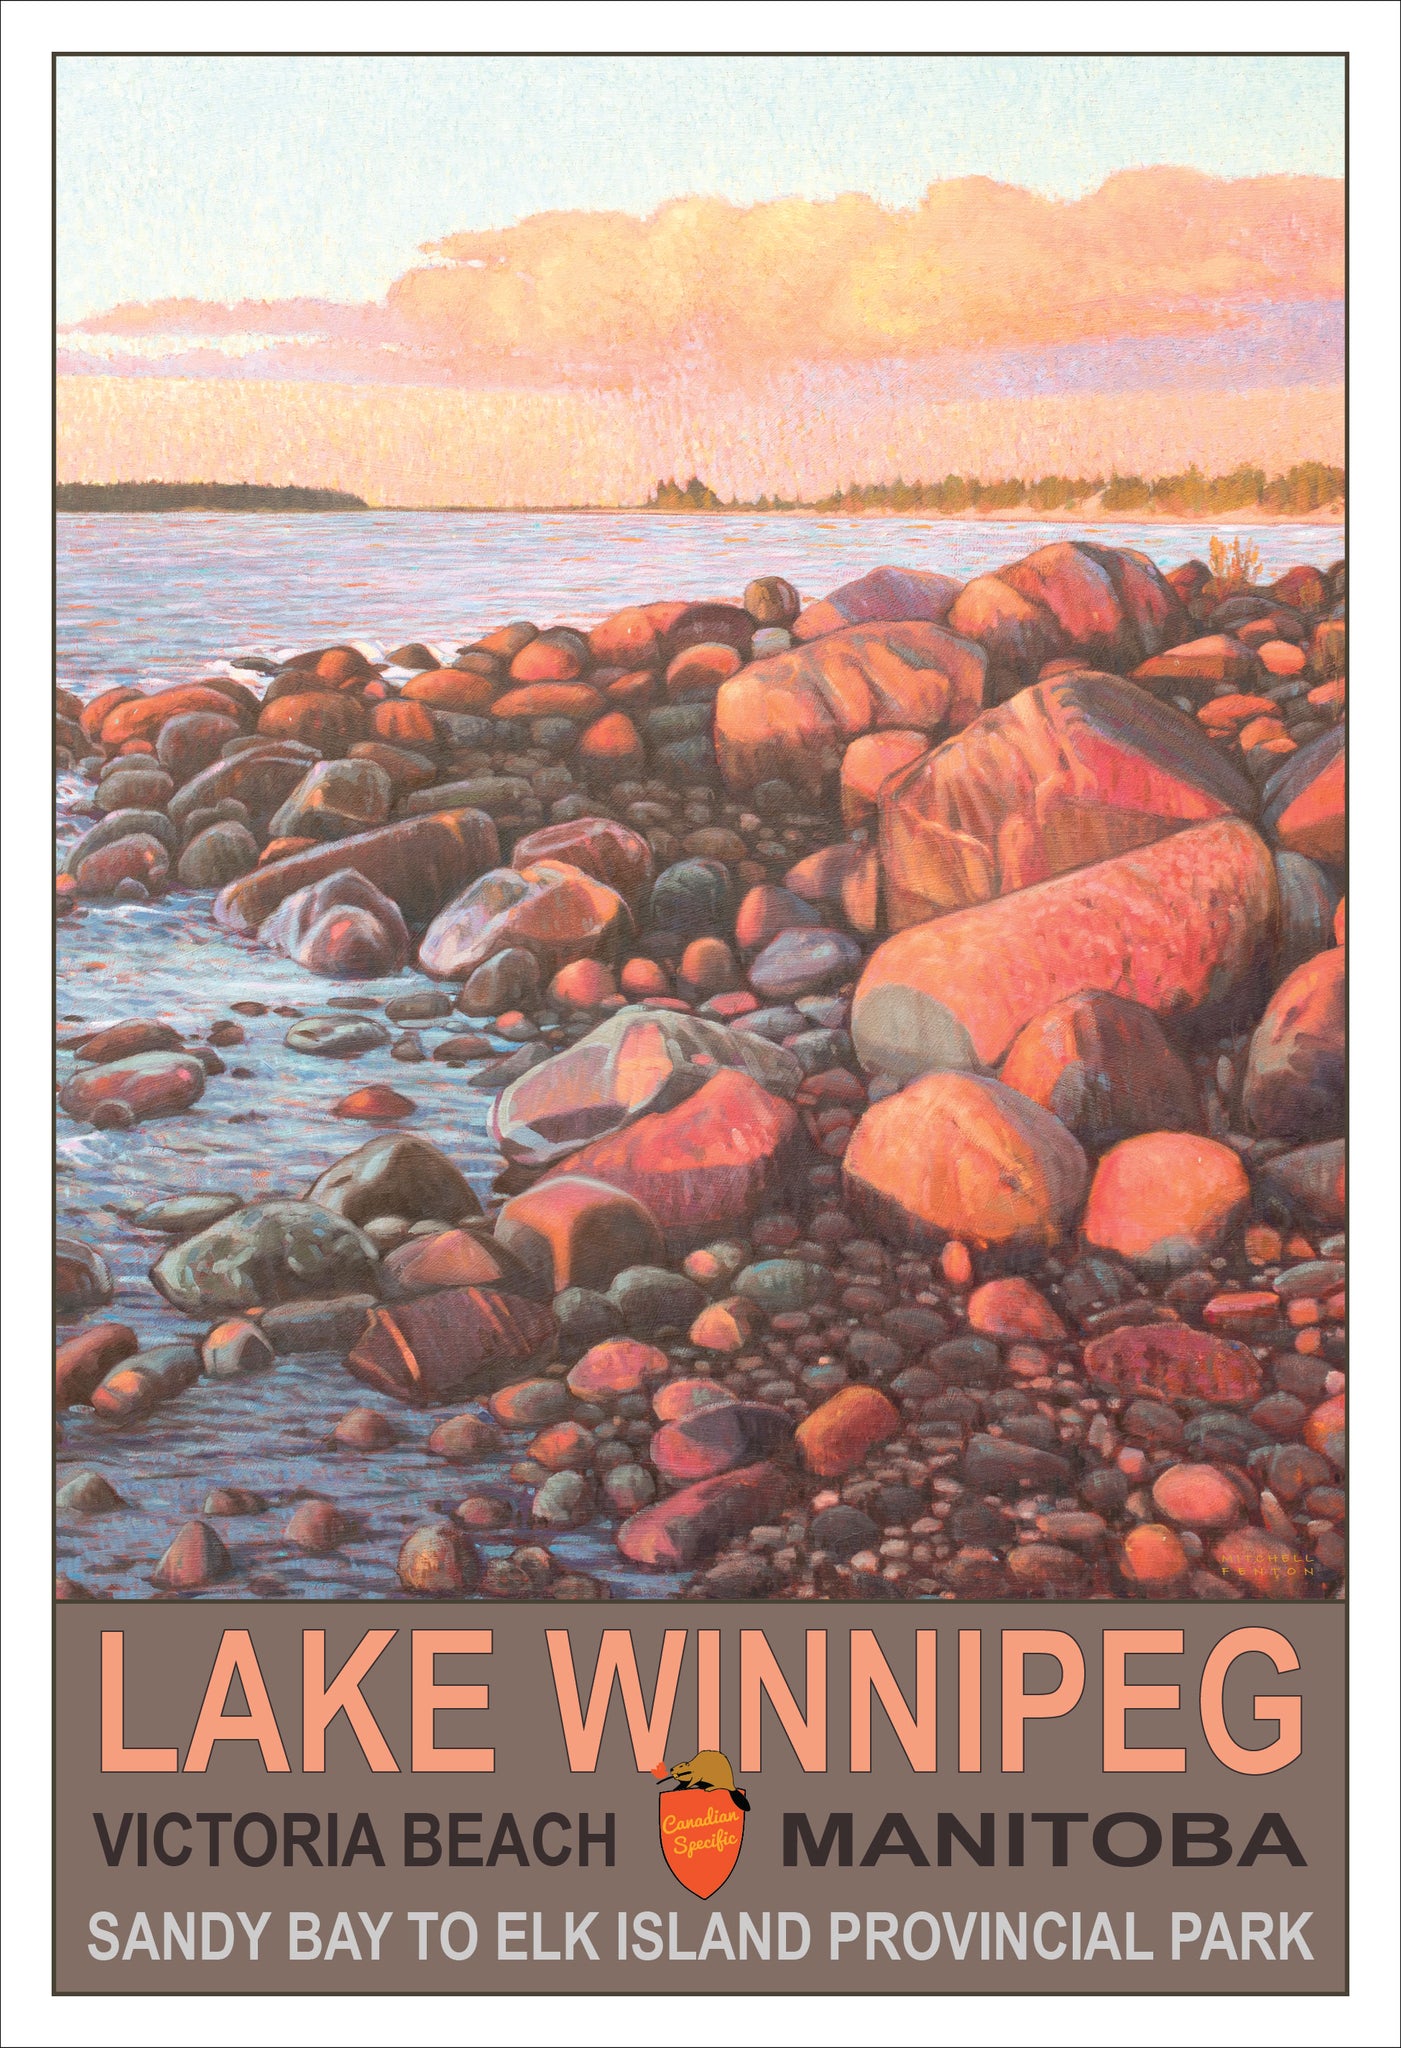 Sandy Bay, Lake Winnipeg